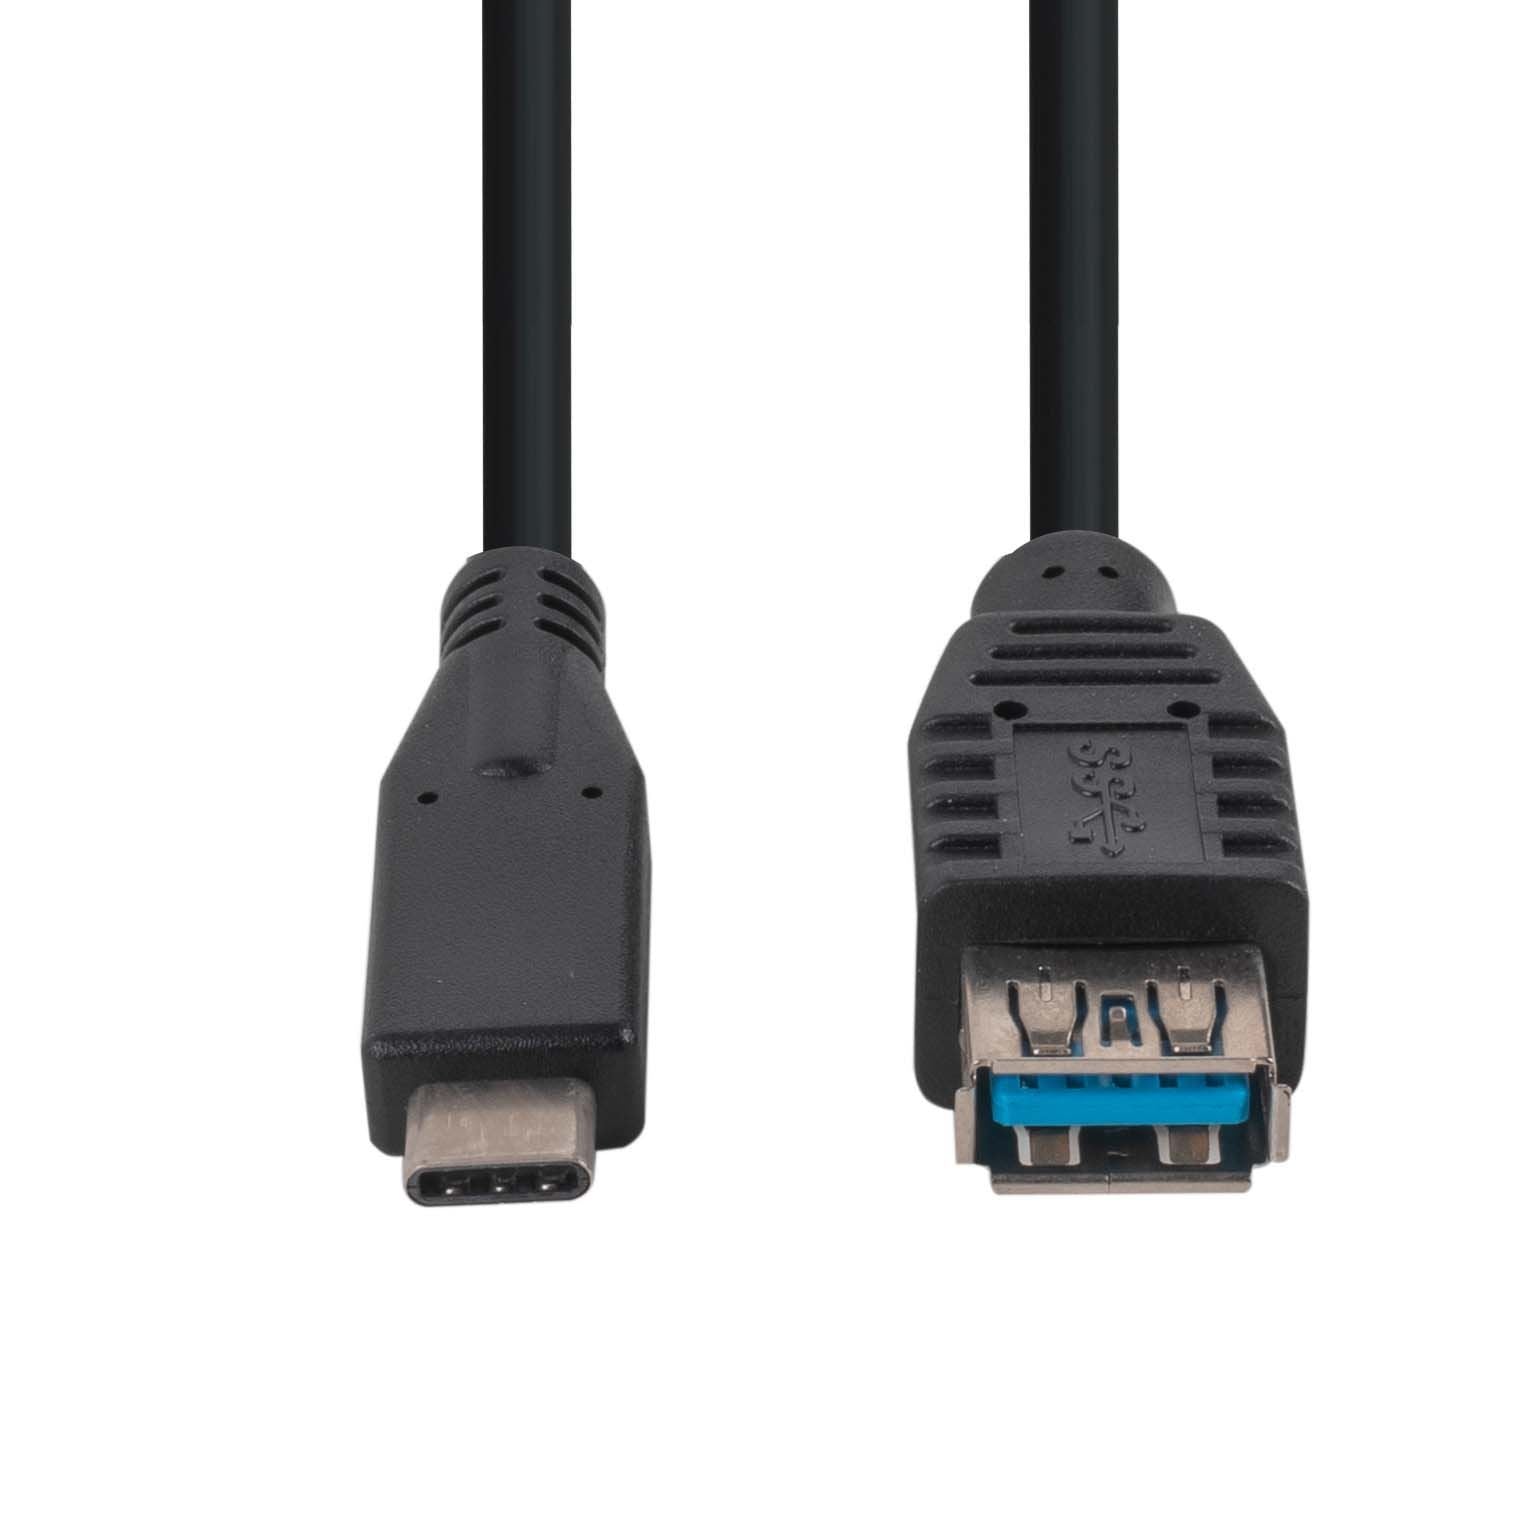 DYNAMIX_1M,_USB_3.1_USB-C_Male_to_USB-A_Female_Cable._Black_Colour. 1151